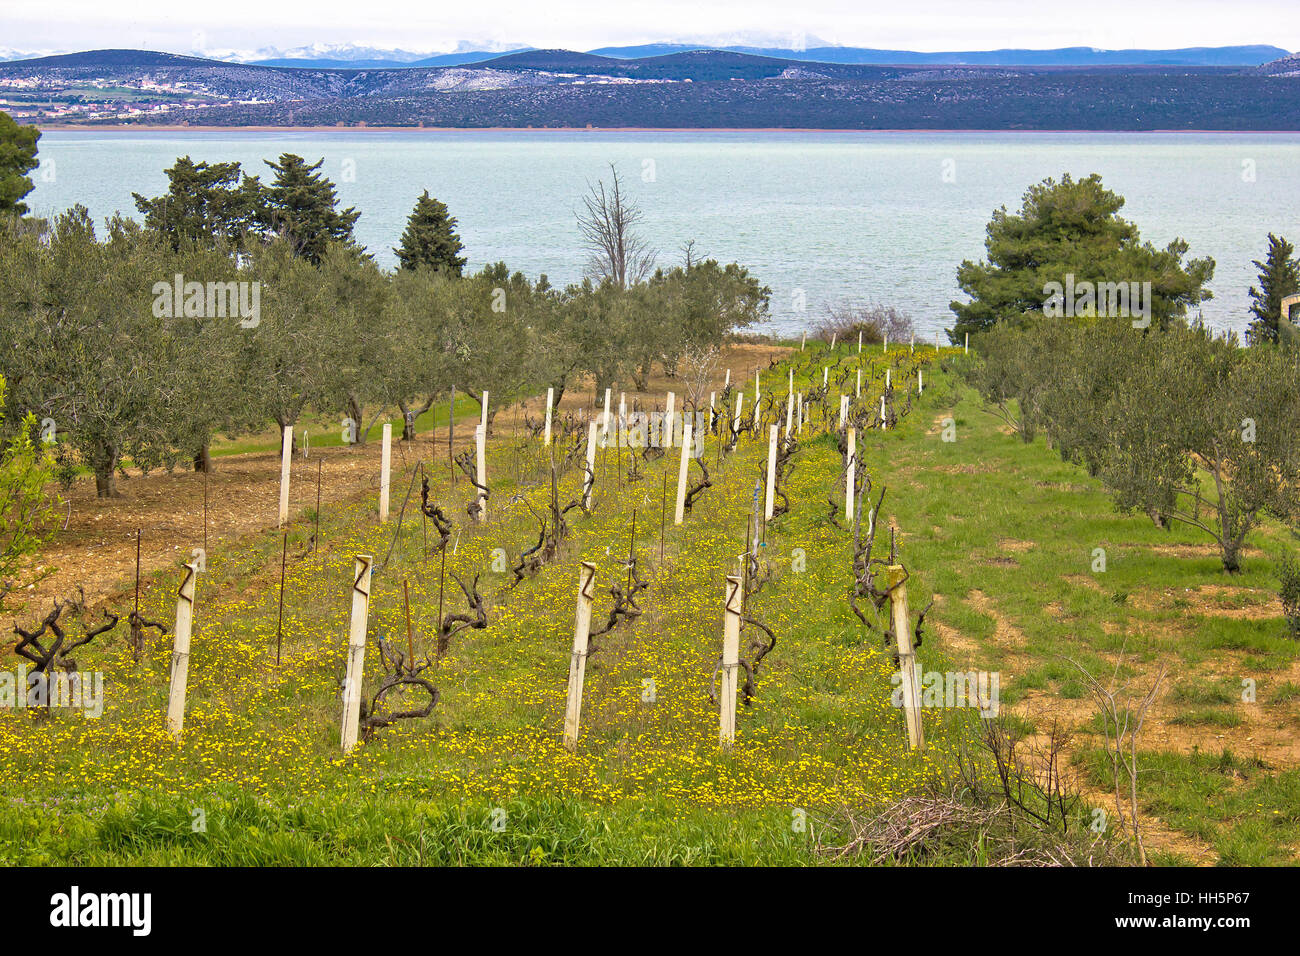 Vineyard and olive trees groove by the lake Vrana in Croatia Stock Photo